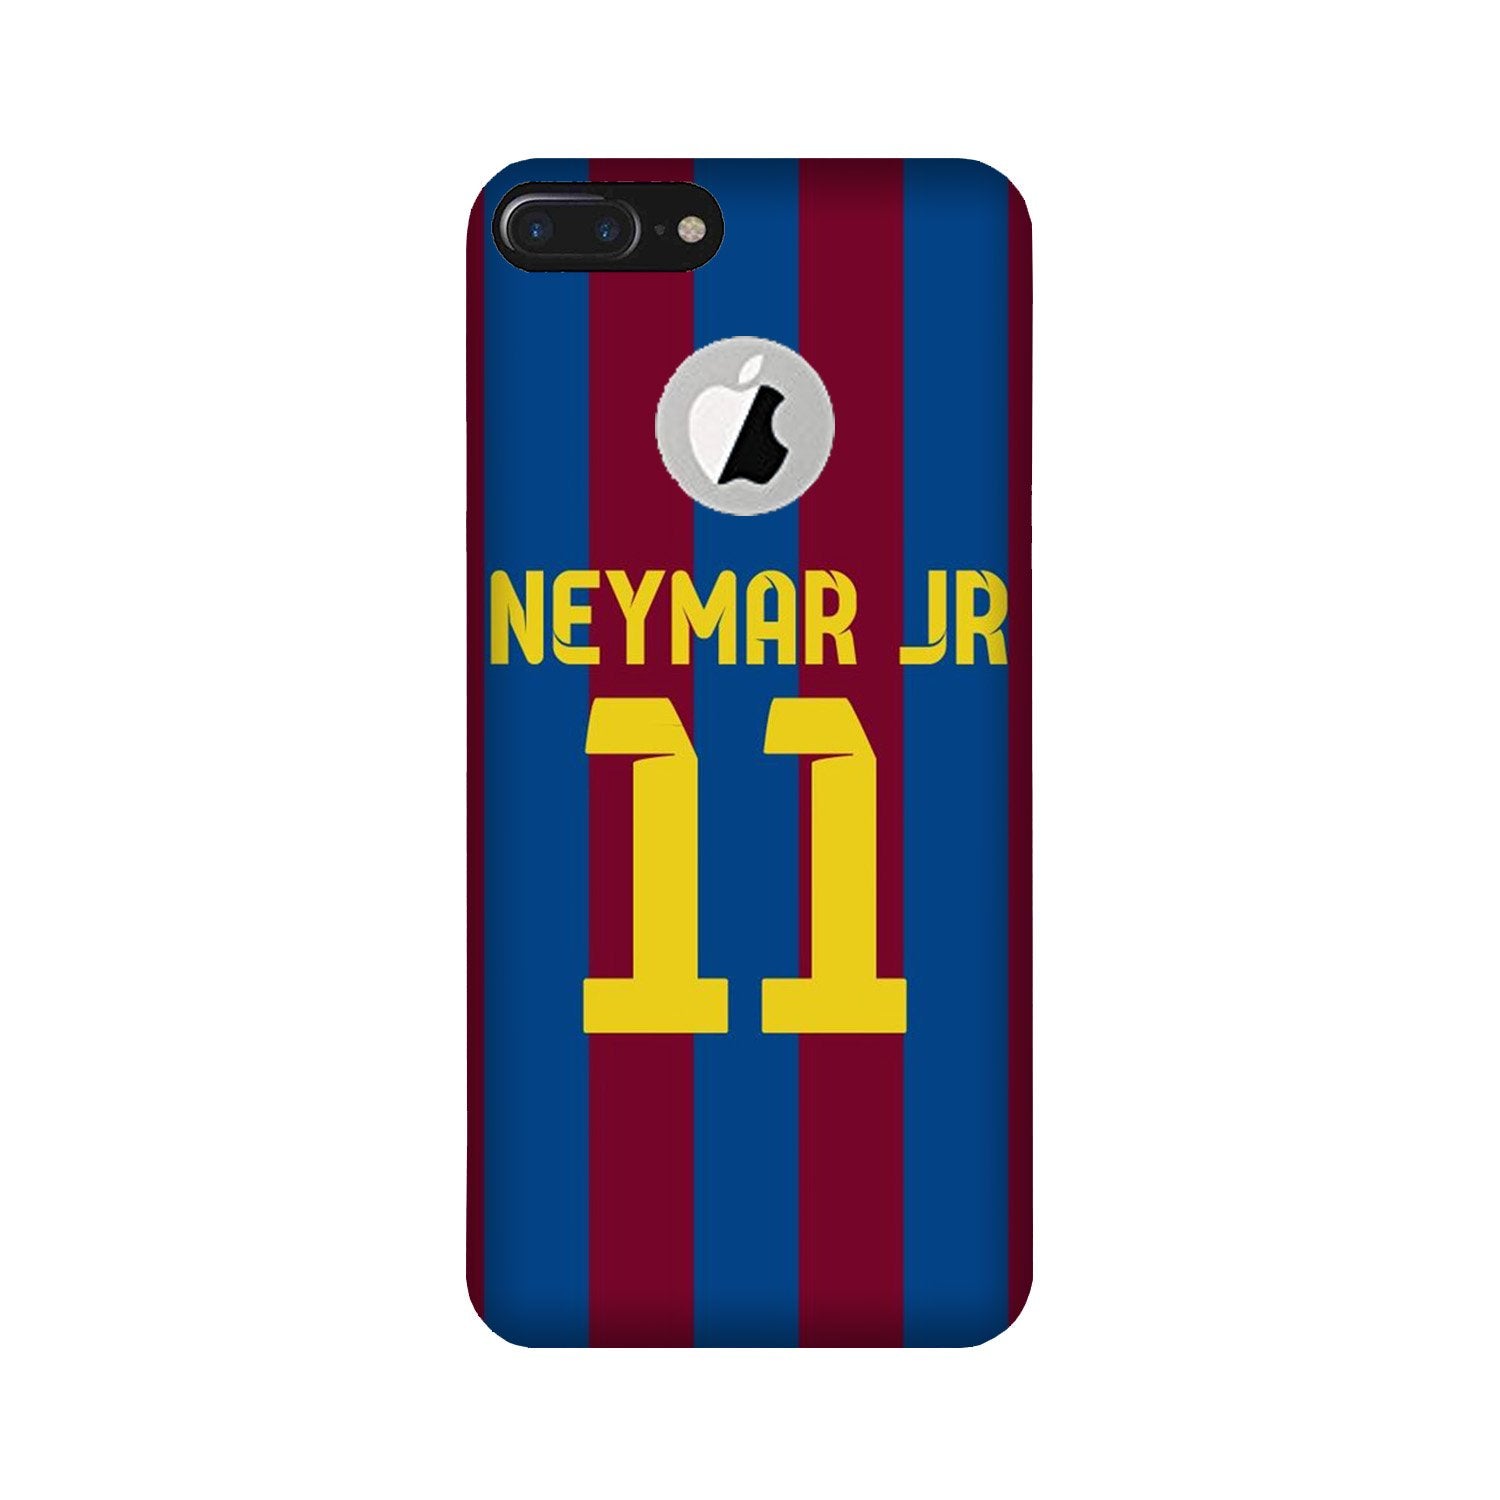 Neymar Jr Case for iPhone 7 Plus logo cut  (Design - 162)